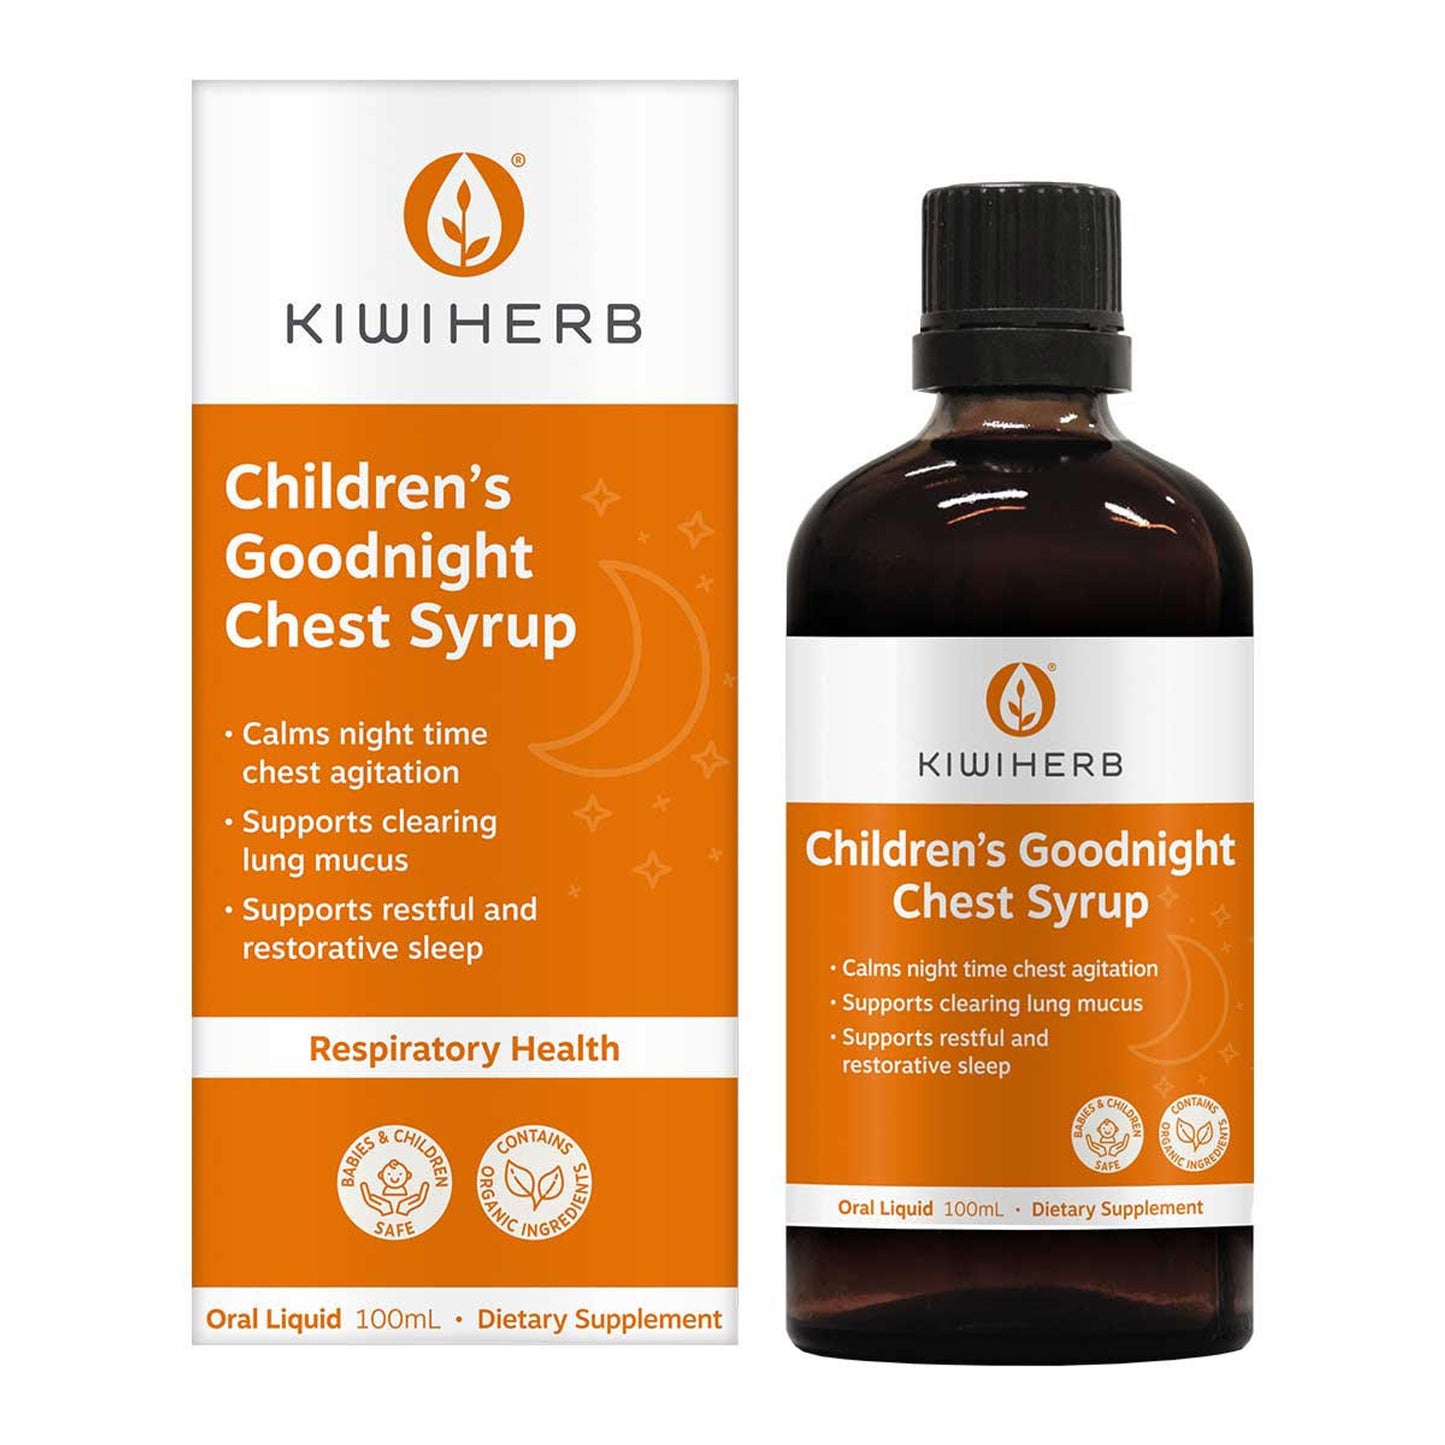 Children's Goodnight Chest Syrup